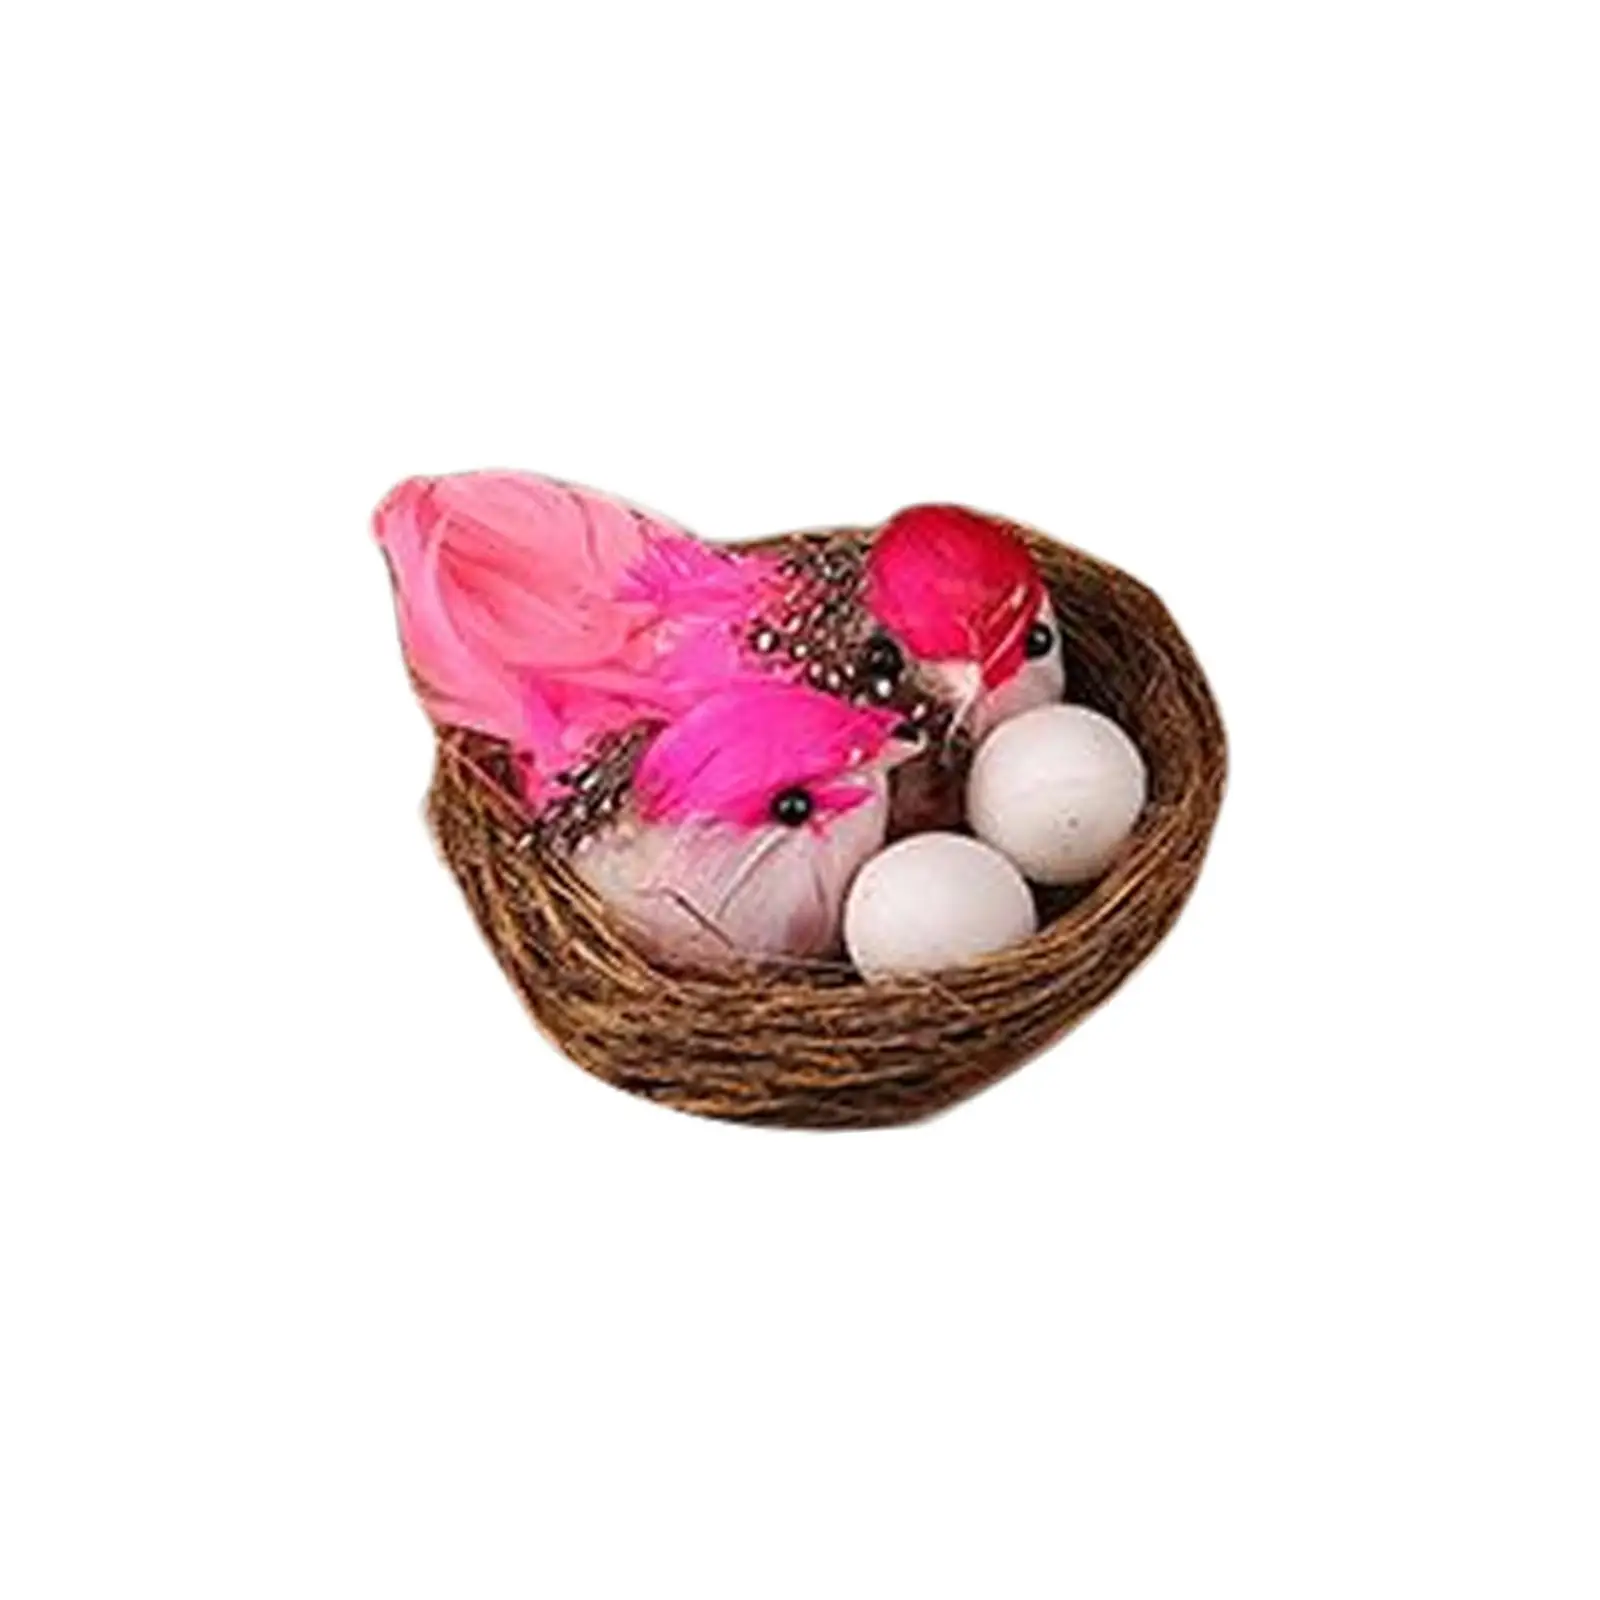 Artificial Easter Birds Nest with Eggs Birds Sculpture for Landscape Decor